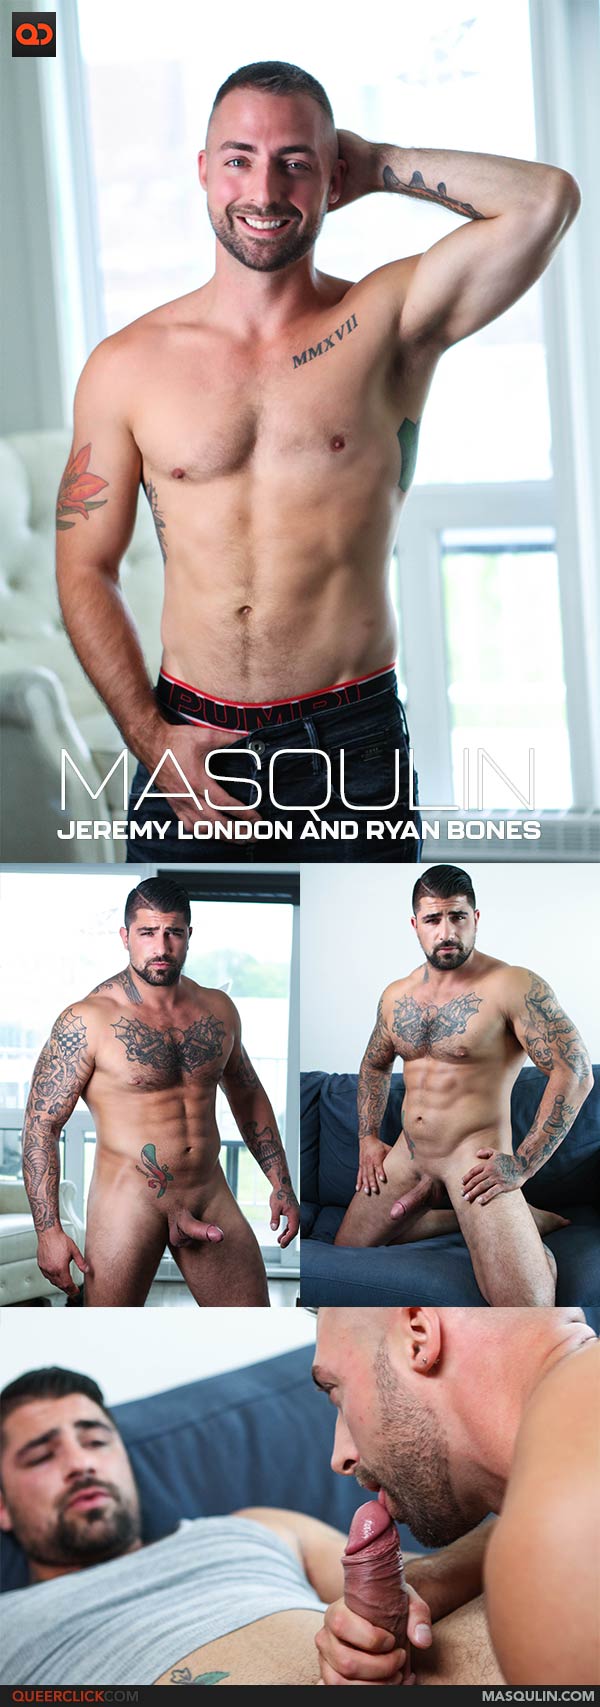 Masqulin: Jeremy London and Ryan Bones